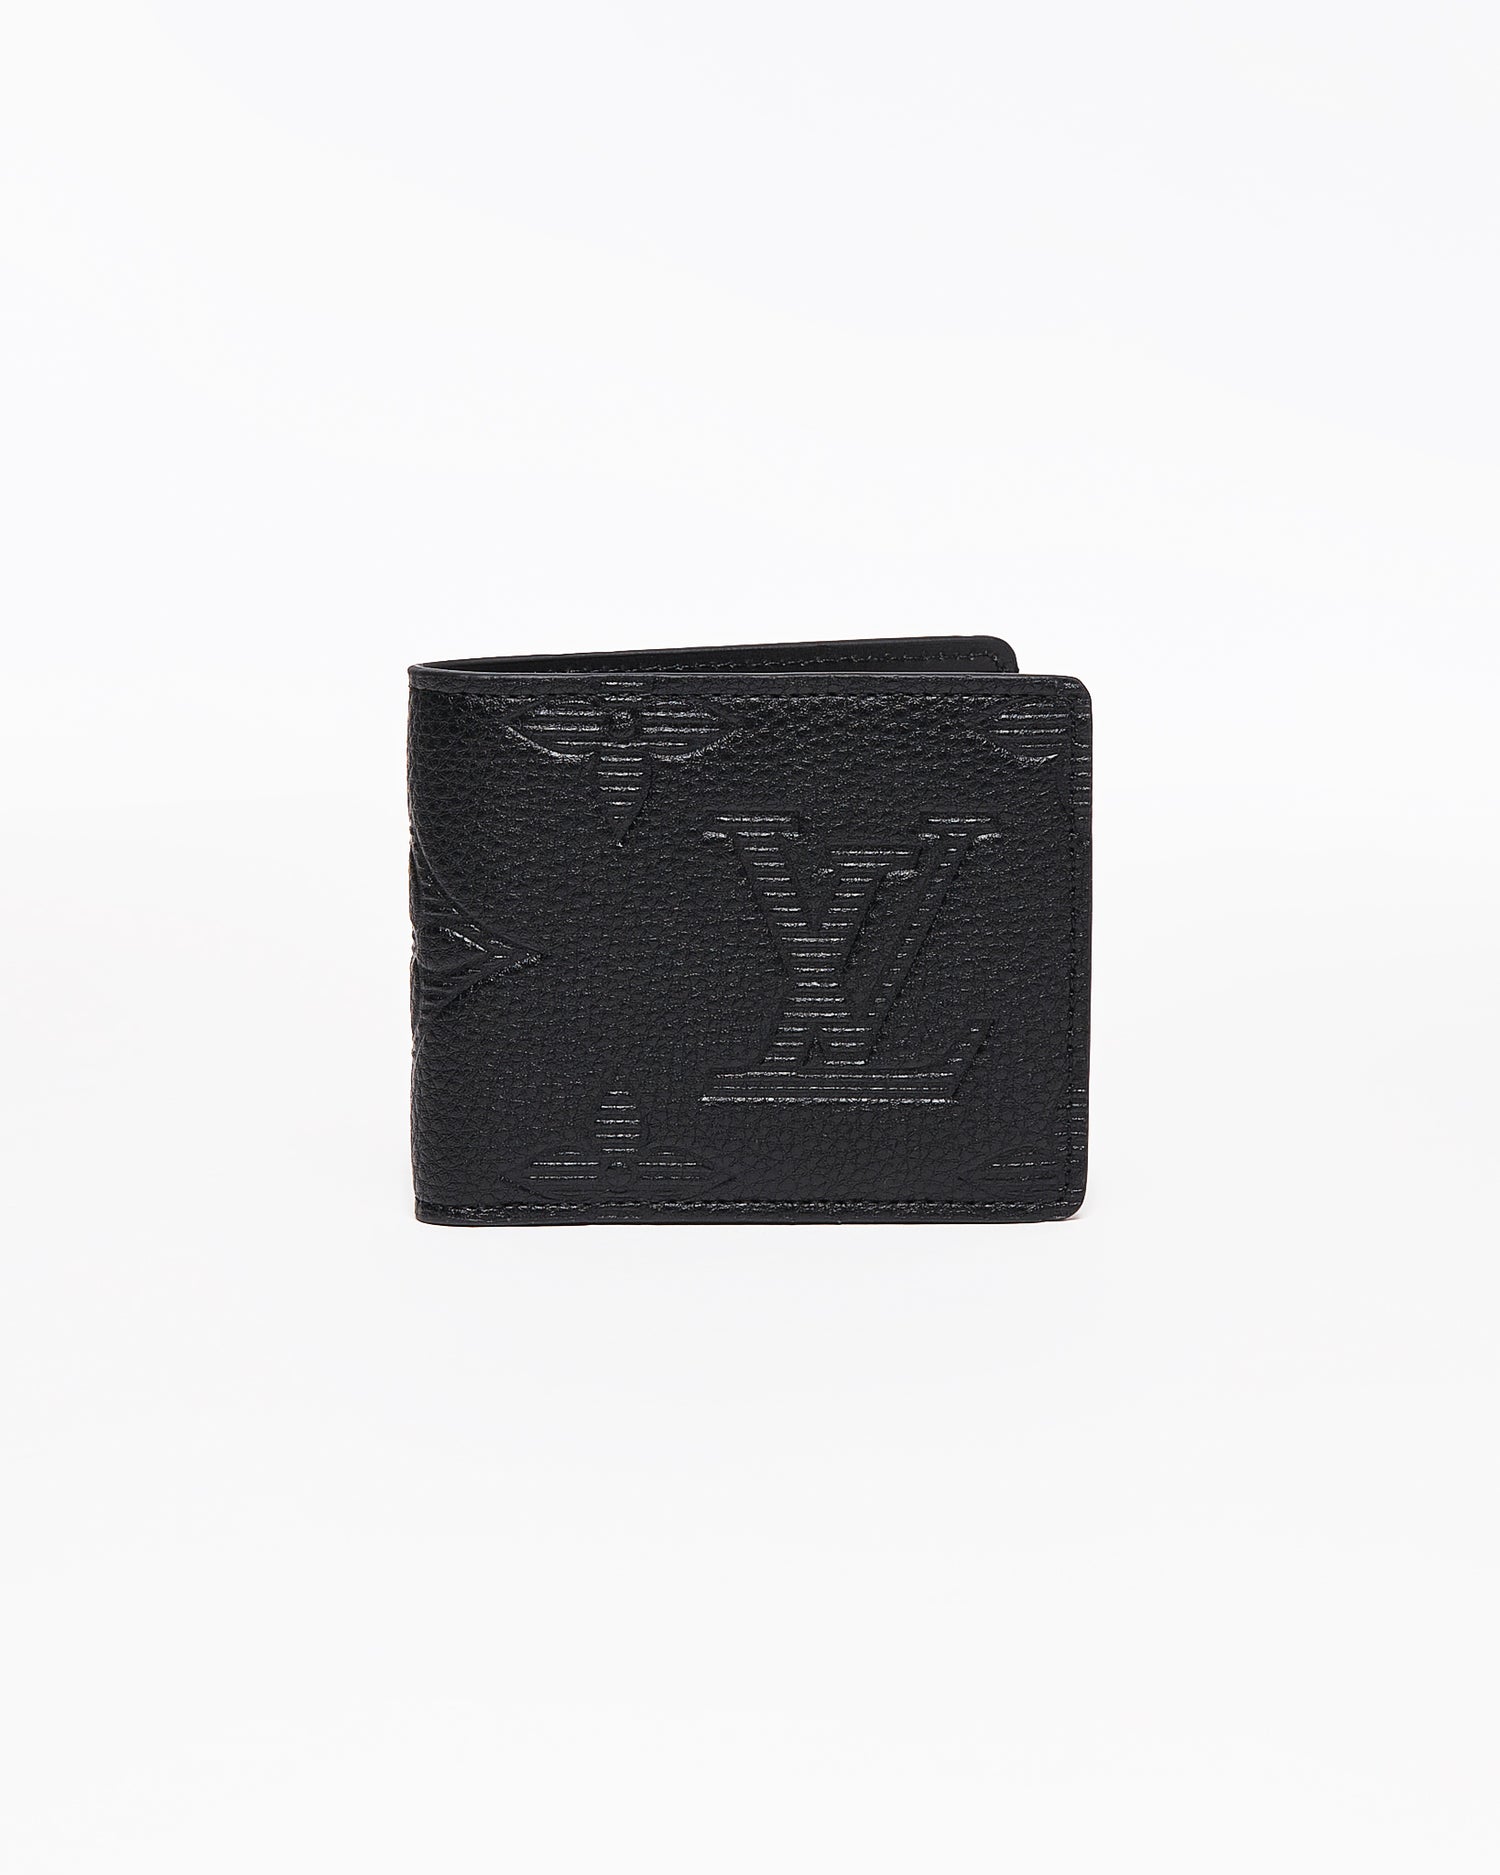 LV 3D Monogram Men Black Wallet 39.90